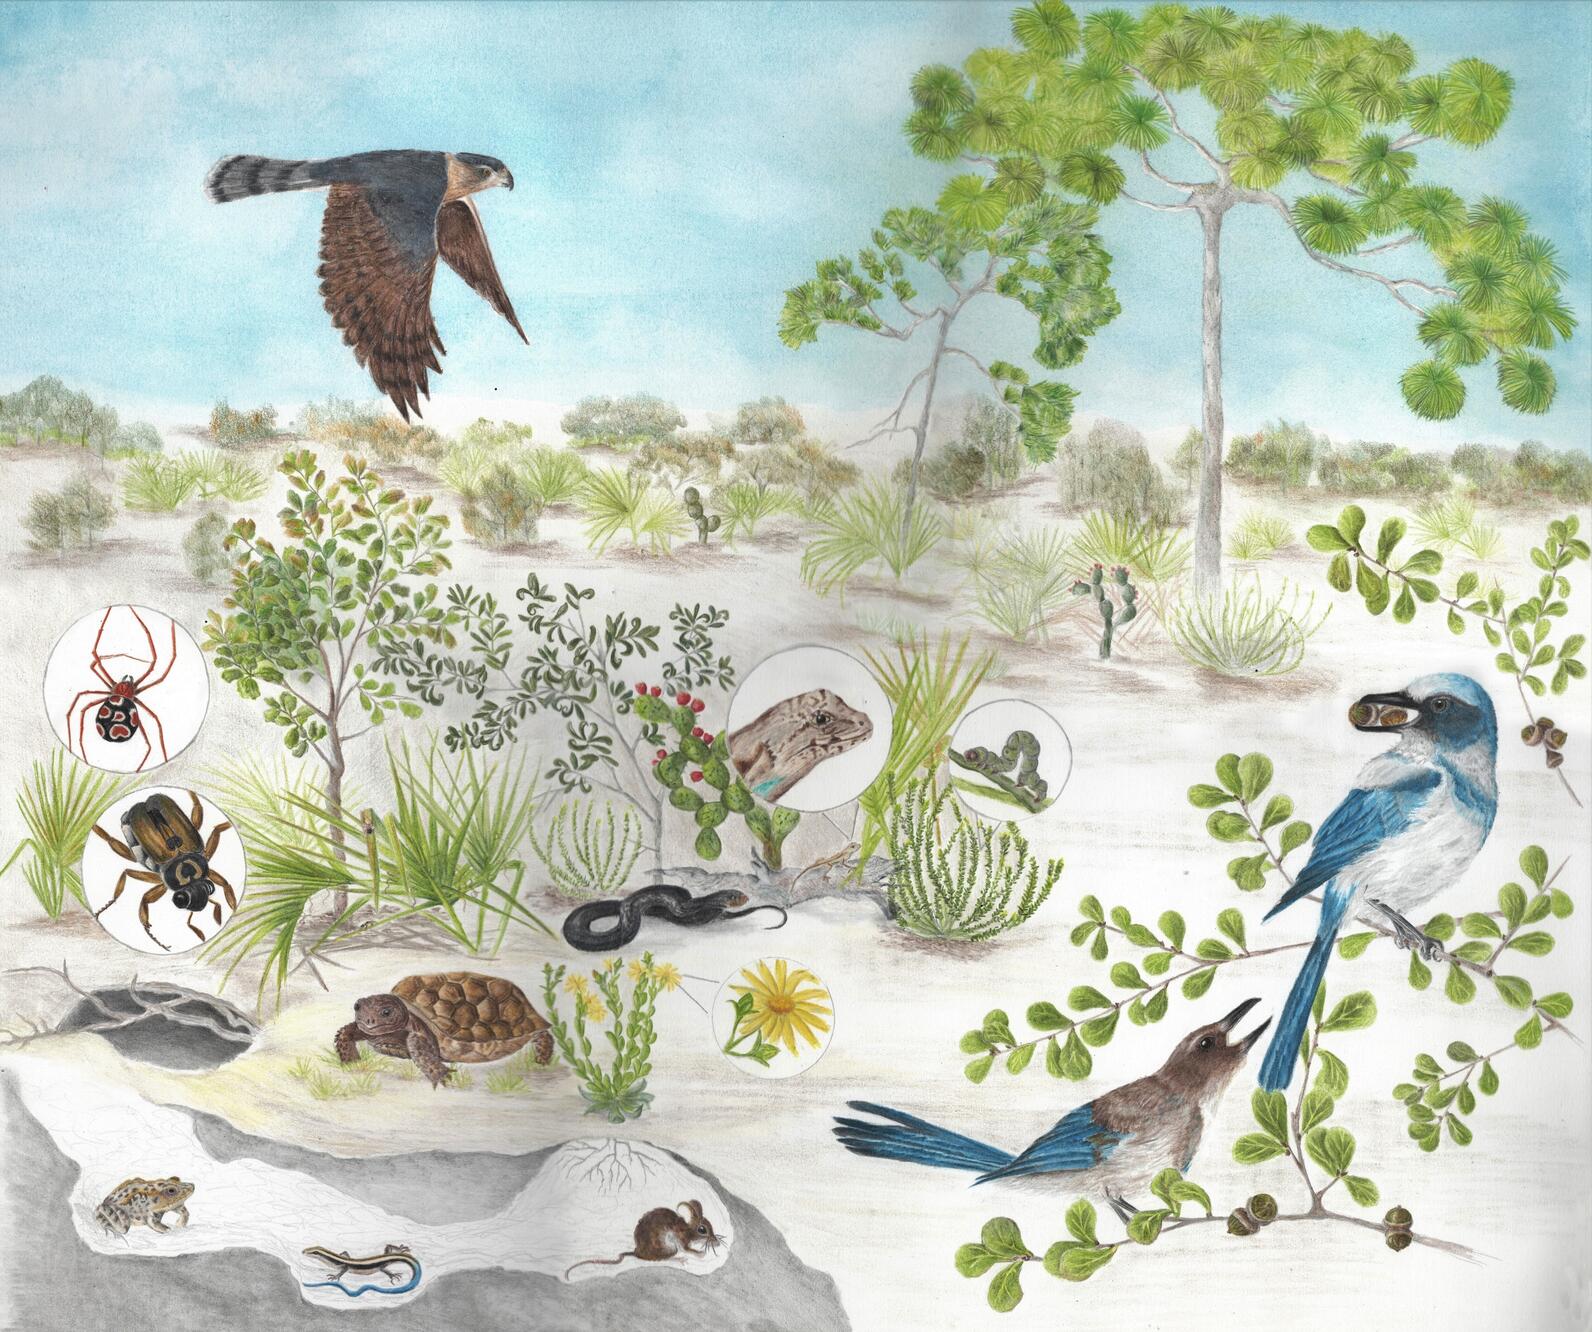 Natasza's illustration of a scrub ecosystem for Audubon Adventures.